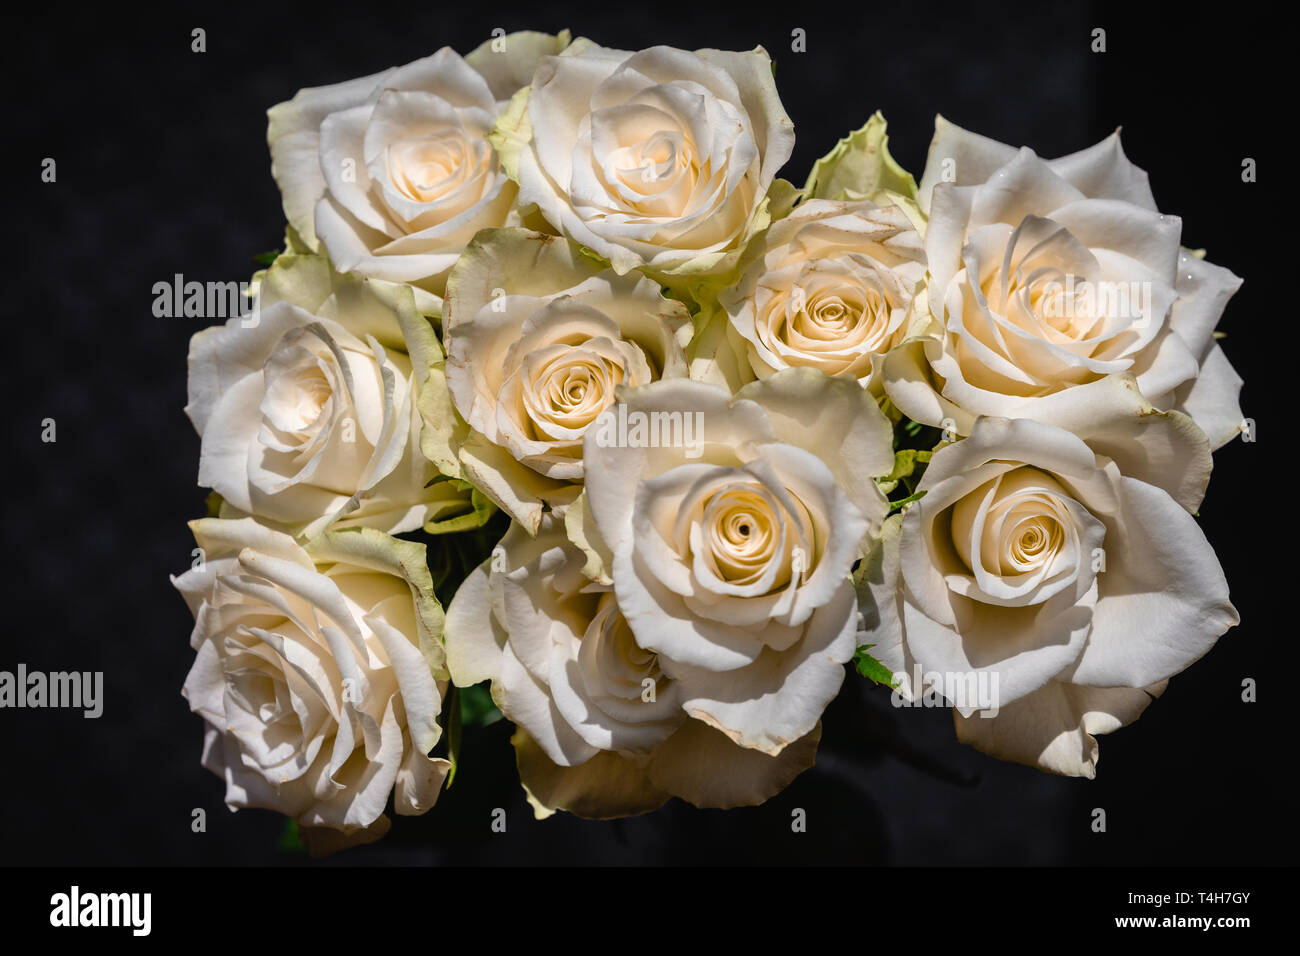 White rose flowers bundled together against black background Stock Photo